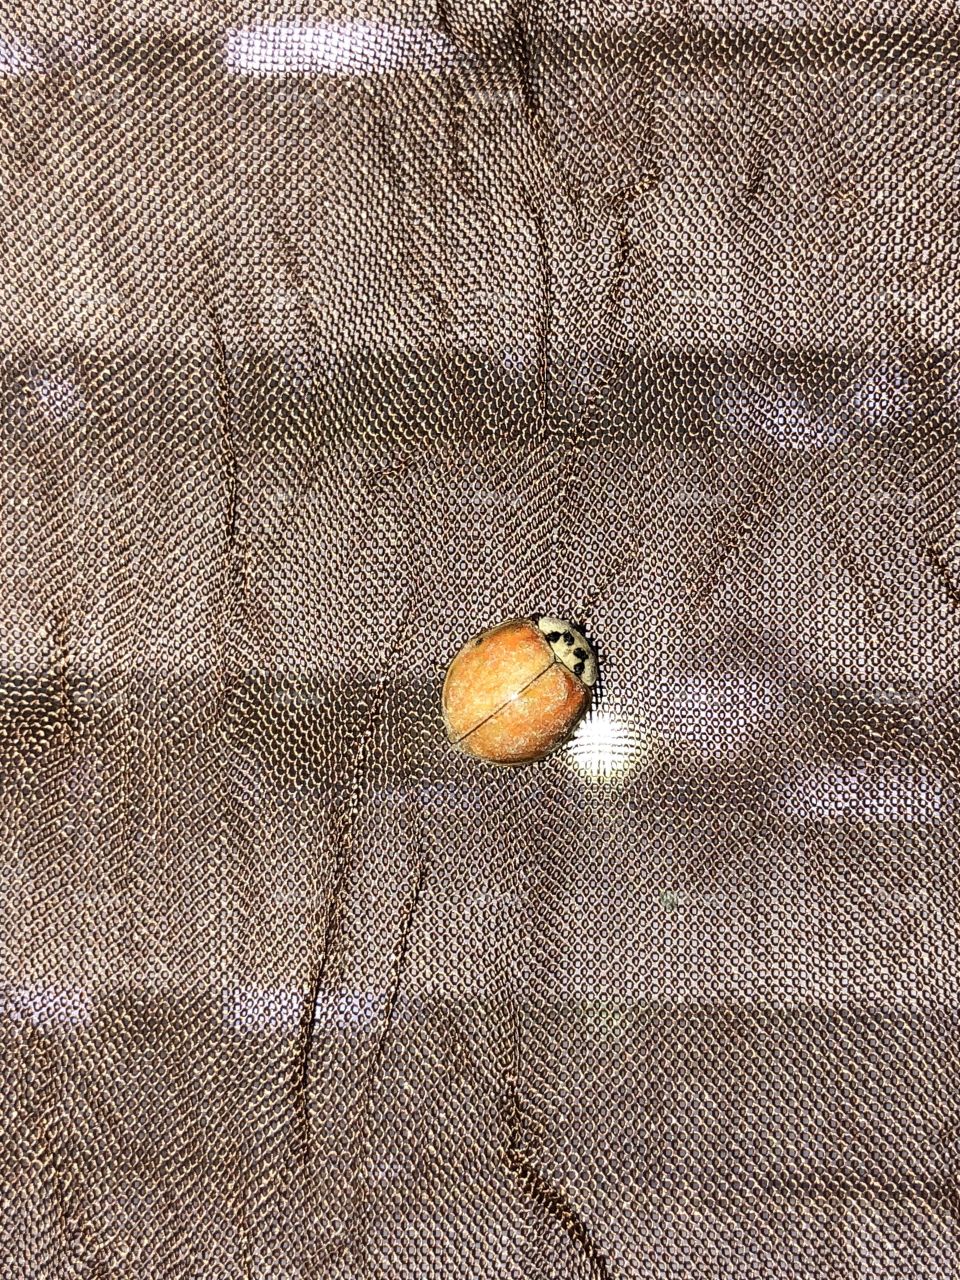 Spotless ladybug 